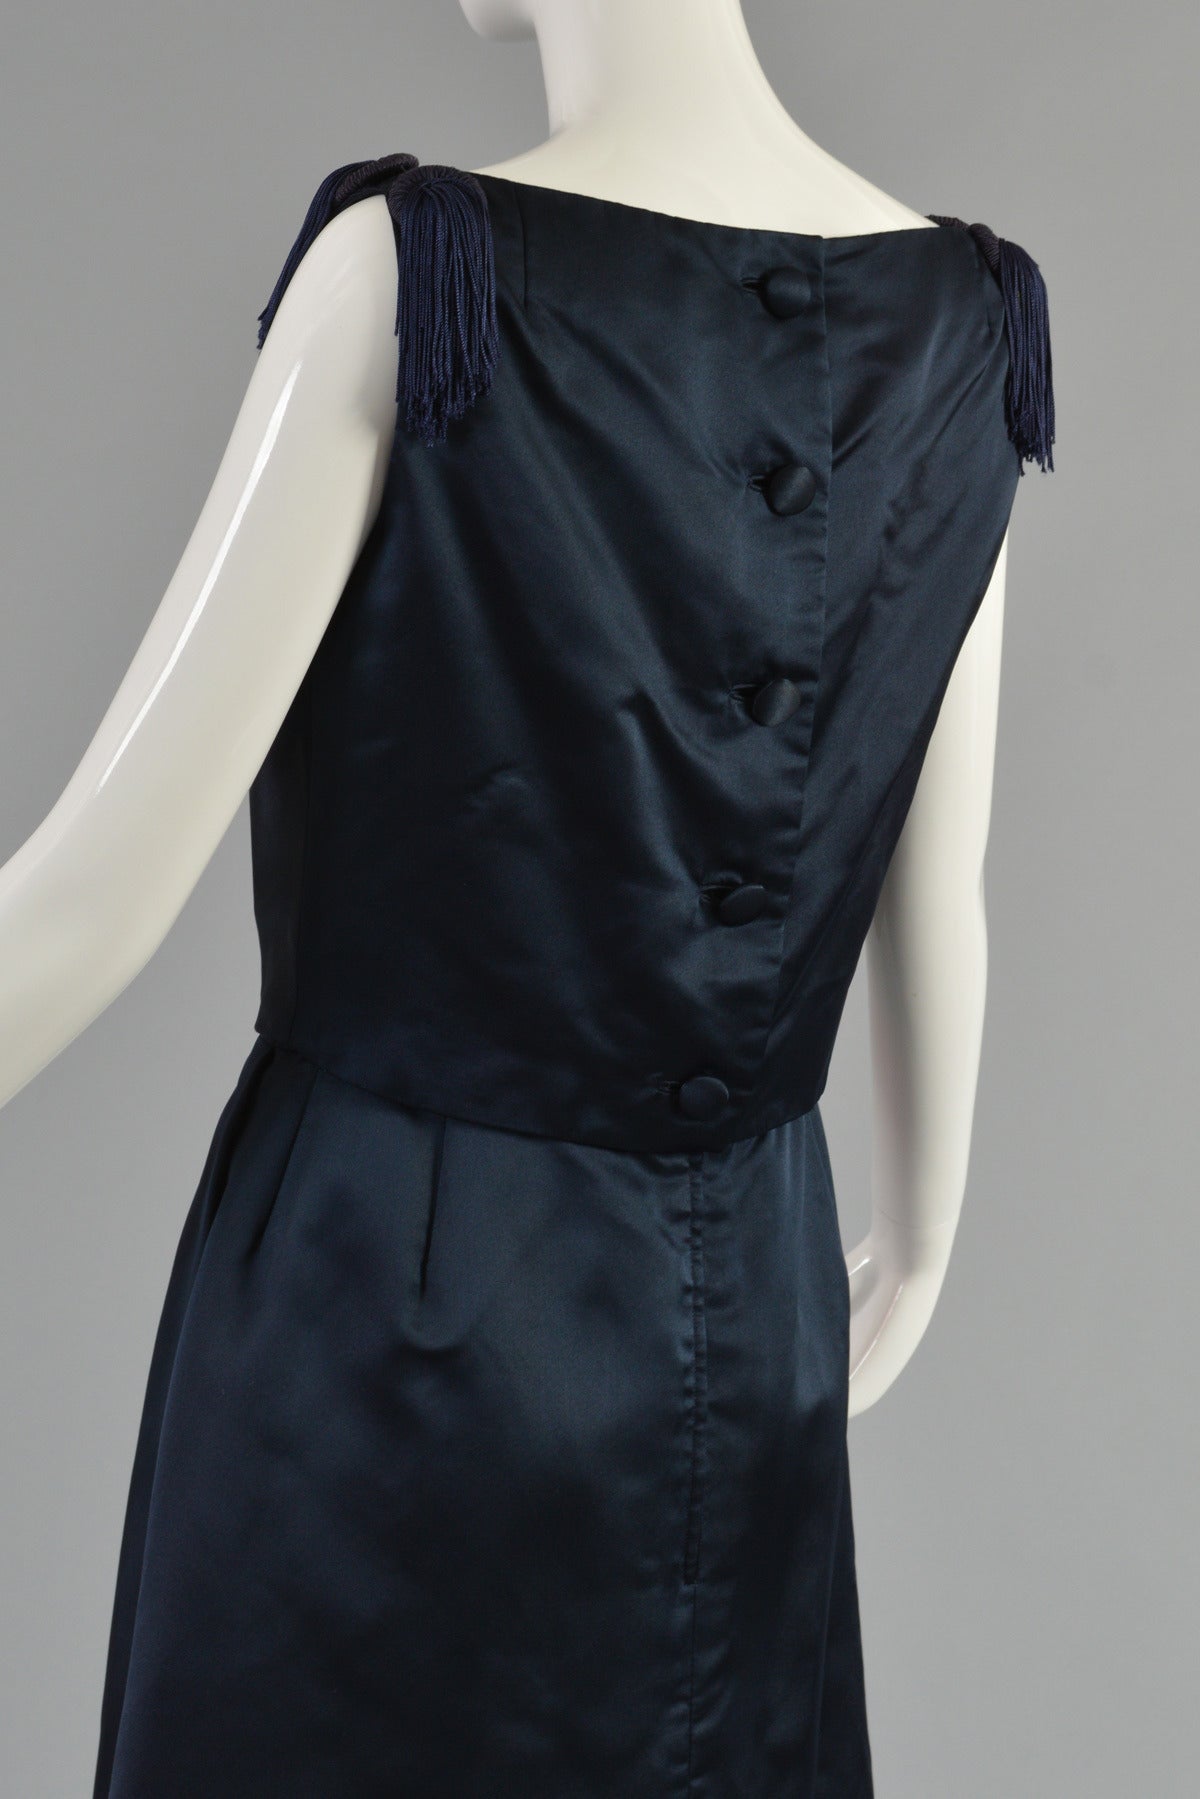 Karen Stark for Harvey Berin Silk Cocktail Dress with Tassel Fringe Shoulders For Sale 3